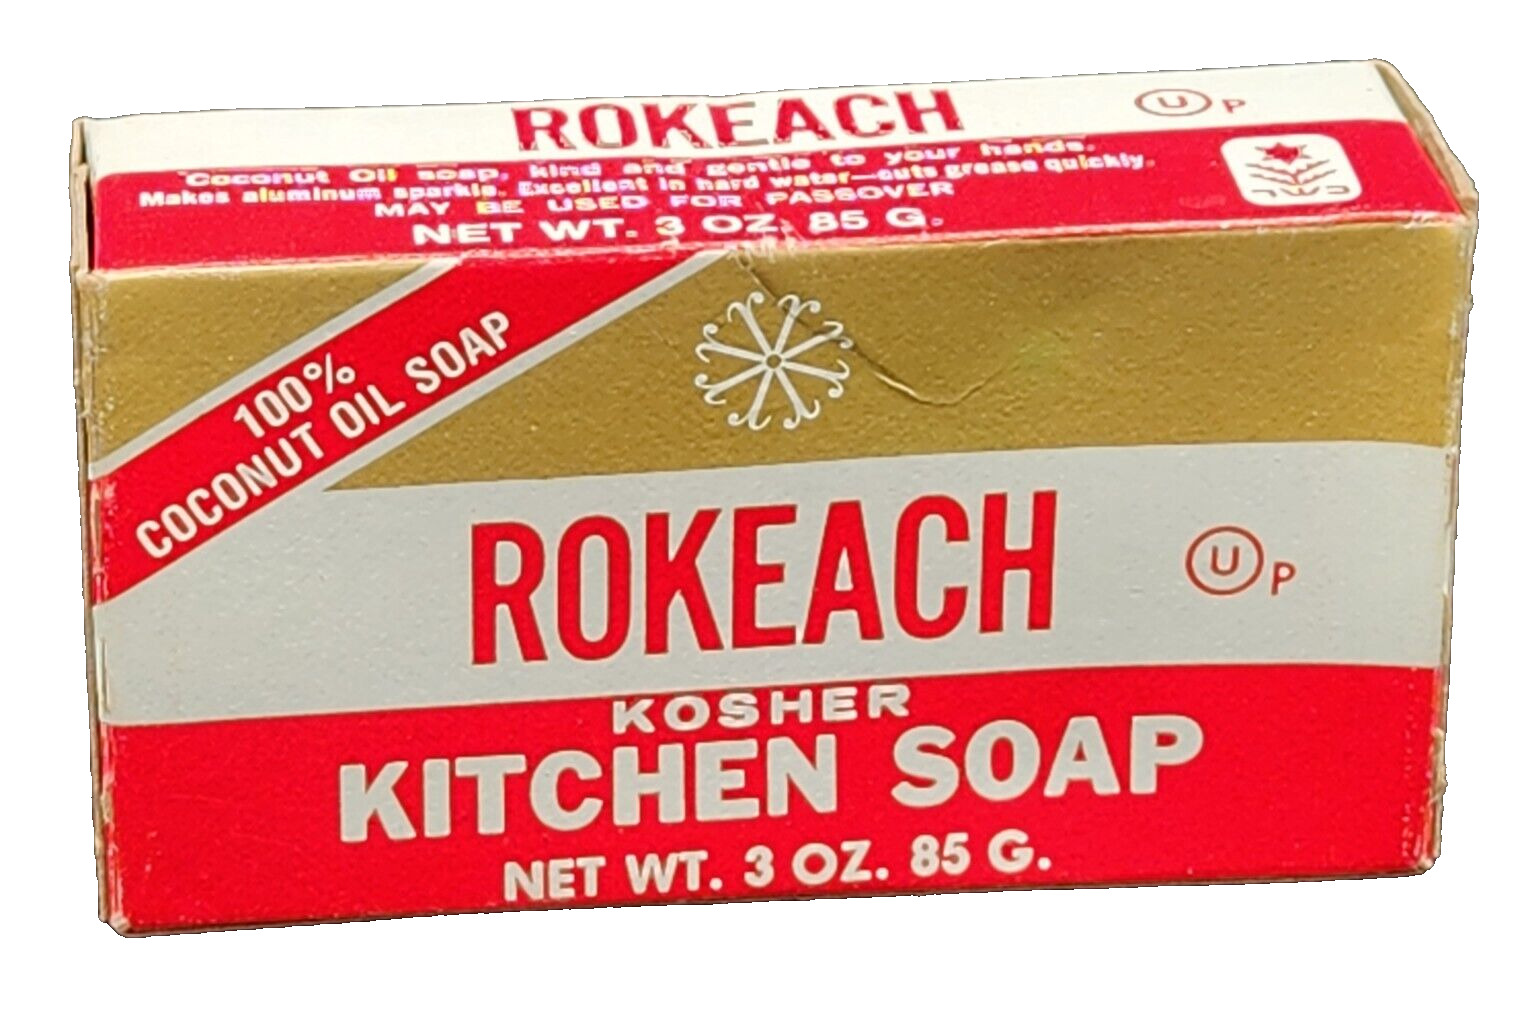 Rokeach Kosher Kitchen Soap - 3 oz. Bar Coconut Oil Soap New